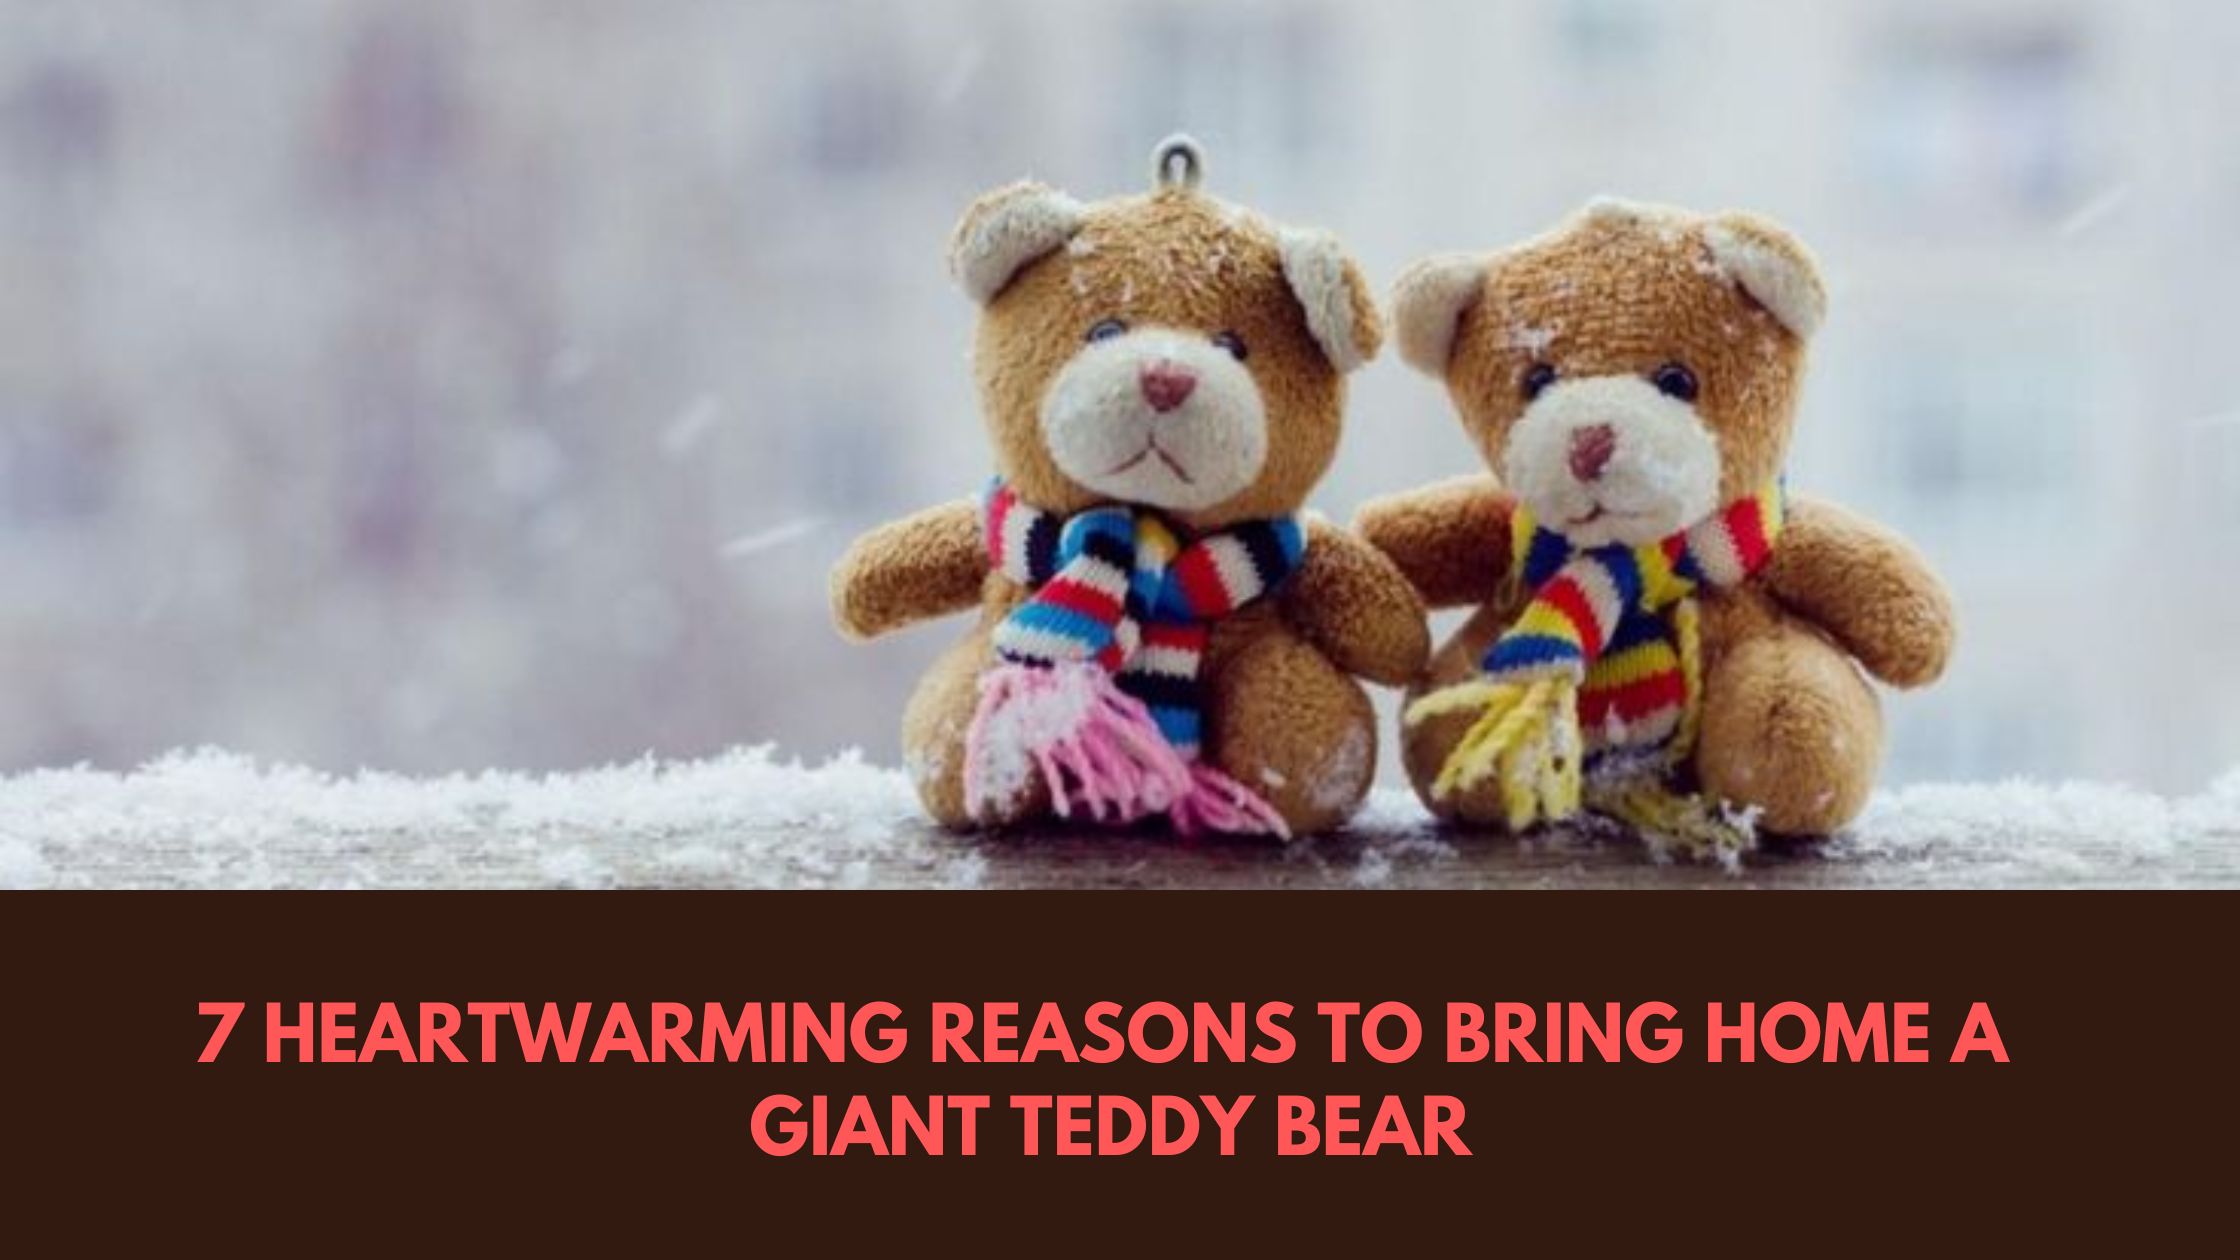 7 Heartwarming Reasons to Bring Home a Giant Teddy Bear